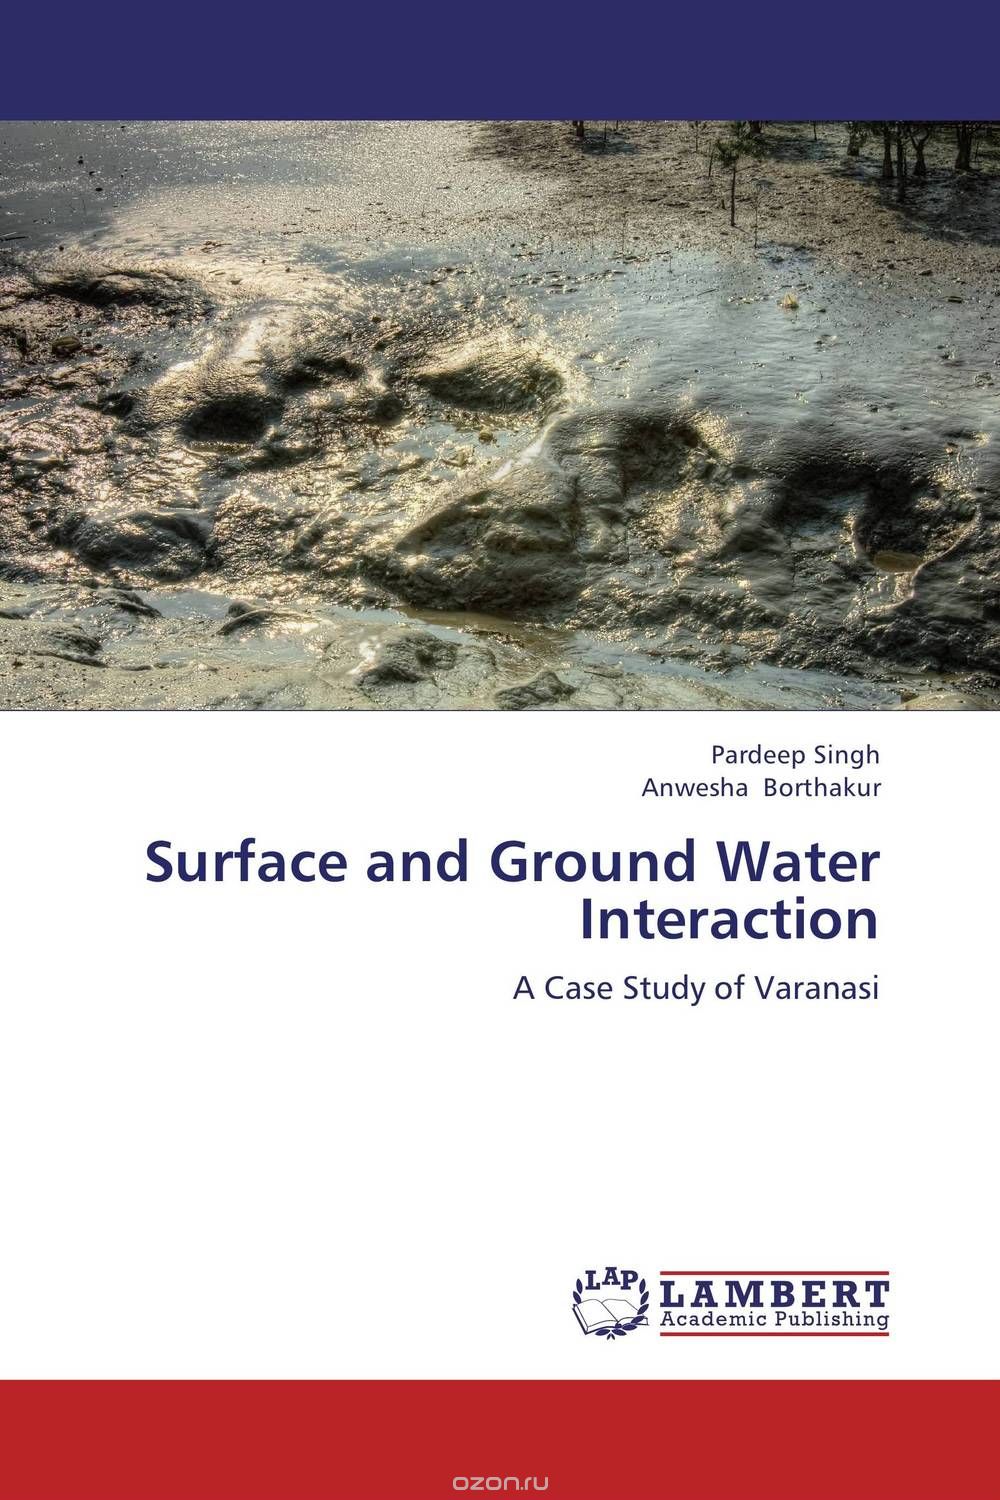 Скачать книгу "Surface and Ground Water Interaction"